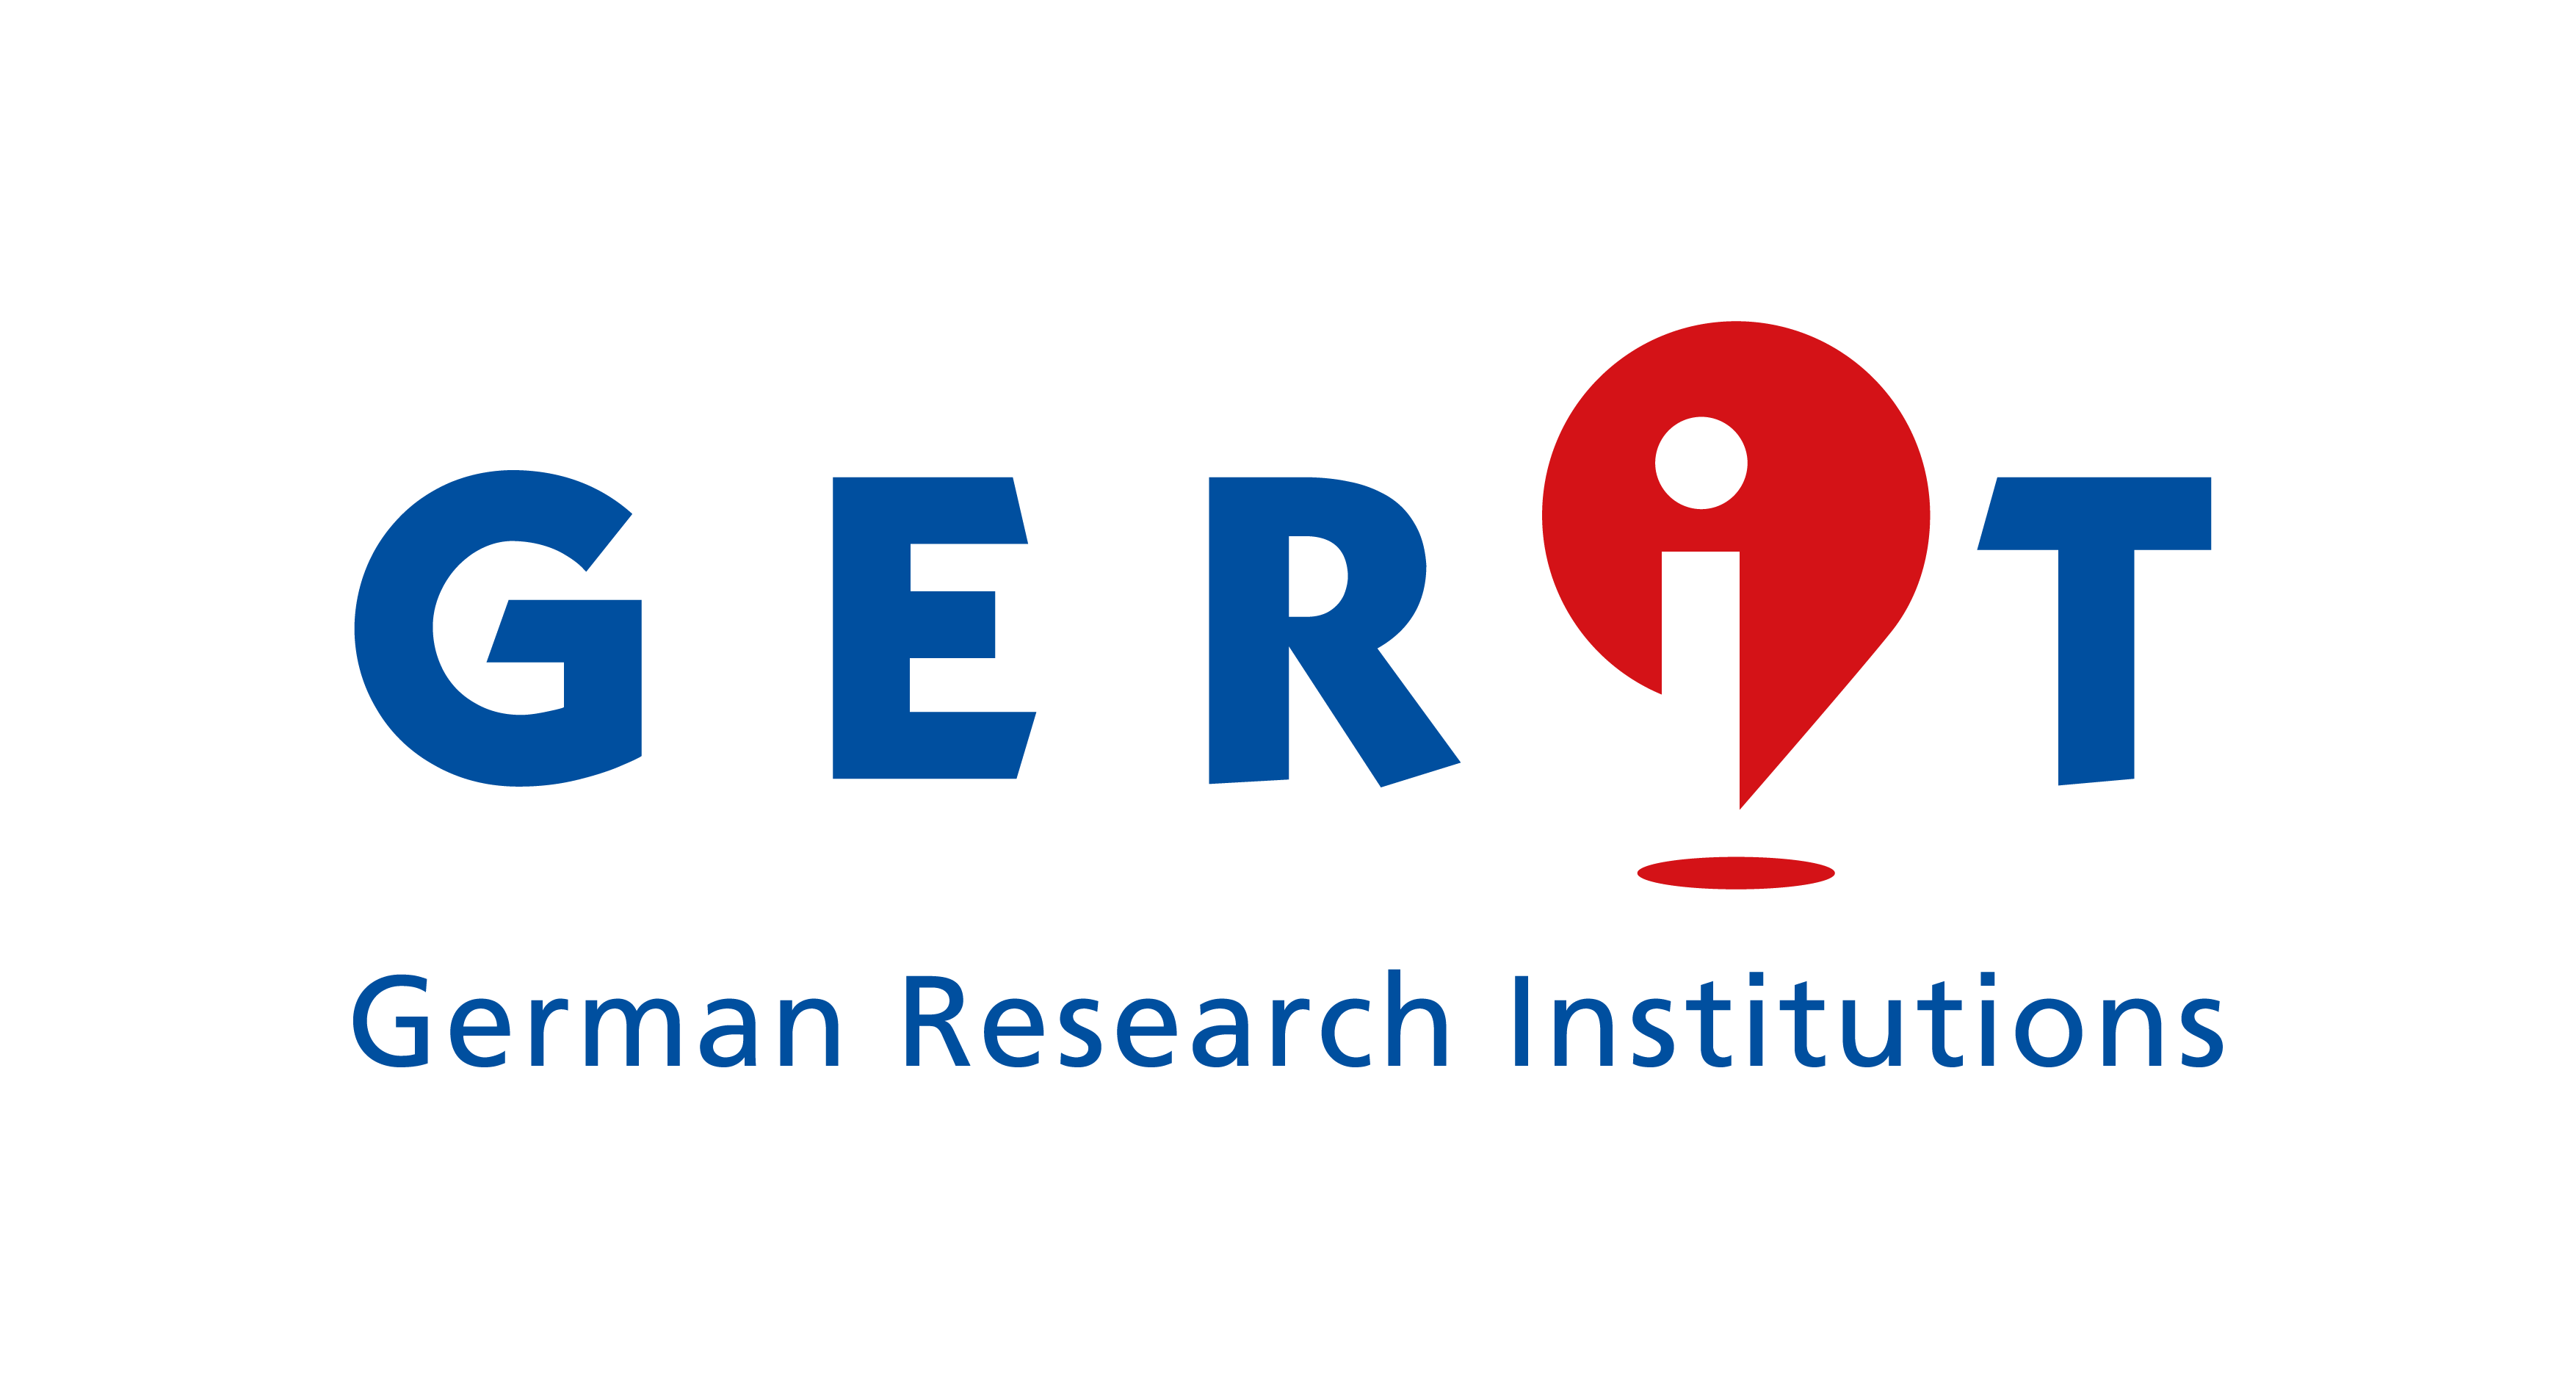 GERiT – German Research Institutions